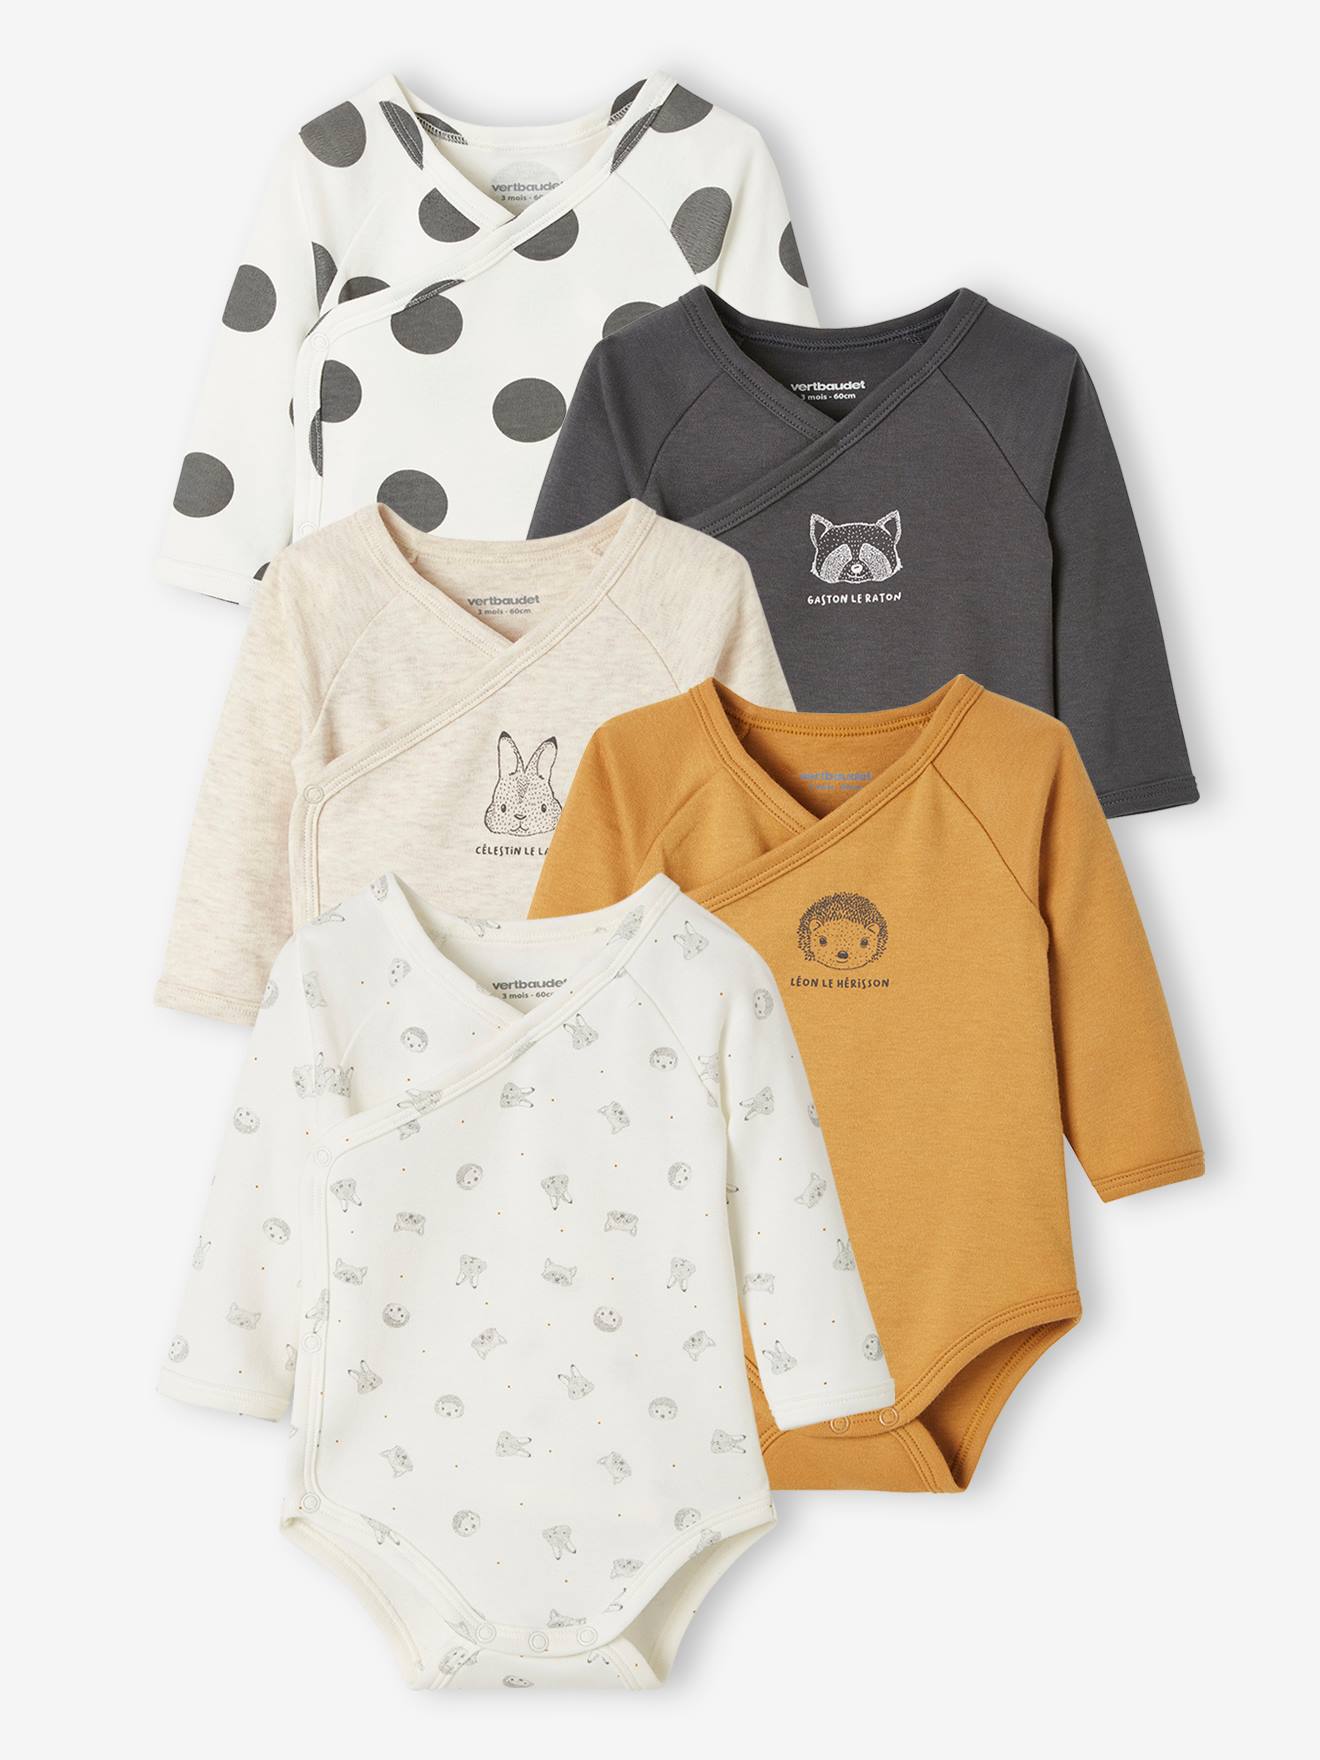 kalkoen token bureau Pack of 5 Long Sleeve Bodysuits for Babies - beige dark two  colors/multicol, Baby